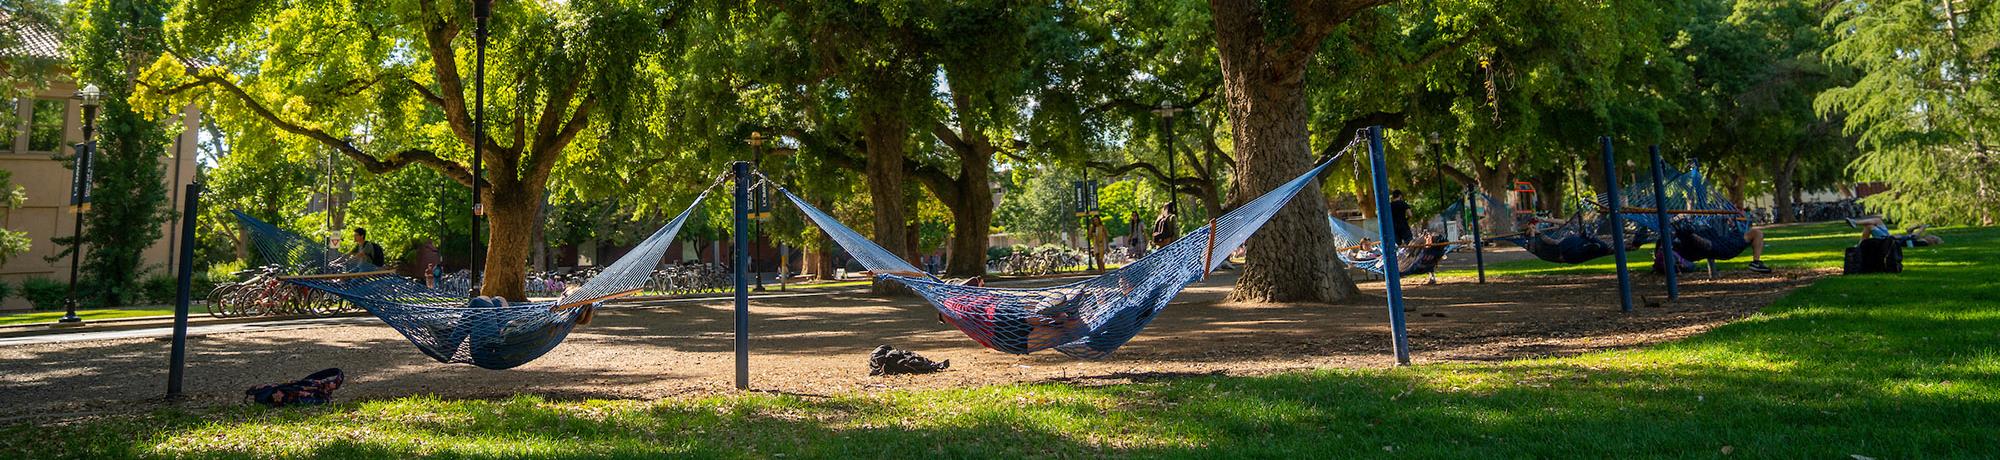 Students in hammocks on UC Davis quad